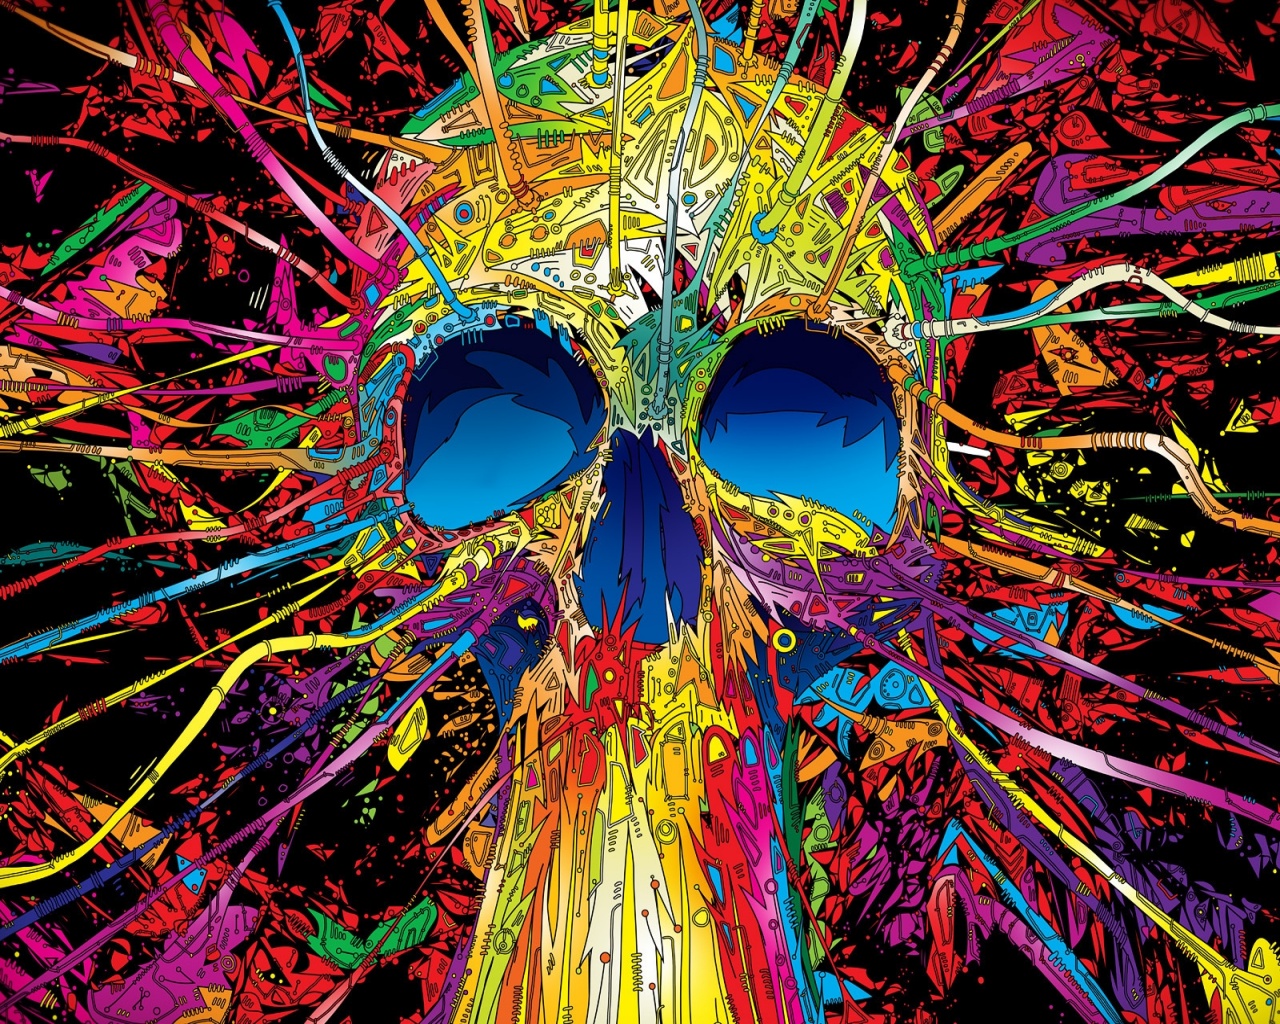 Colourful Skull